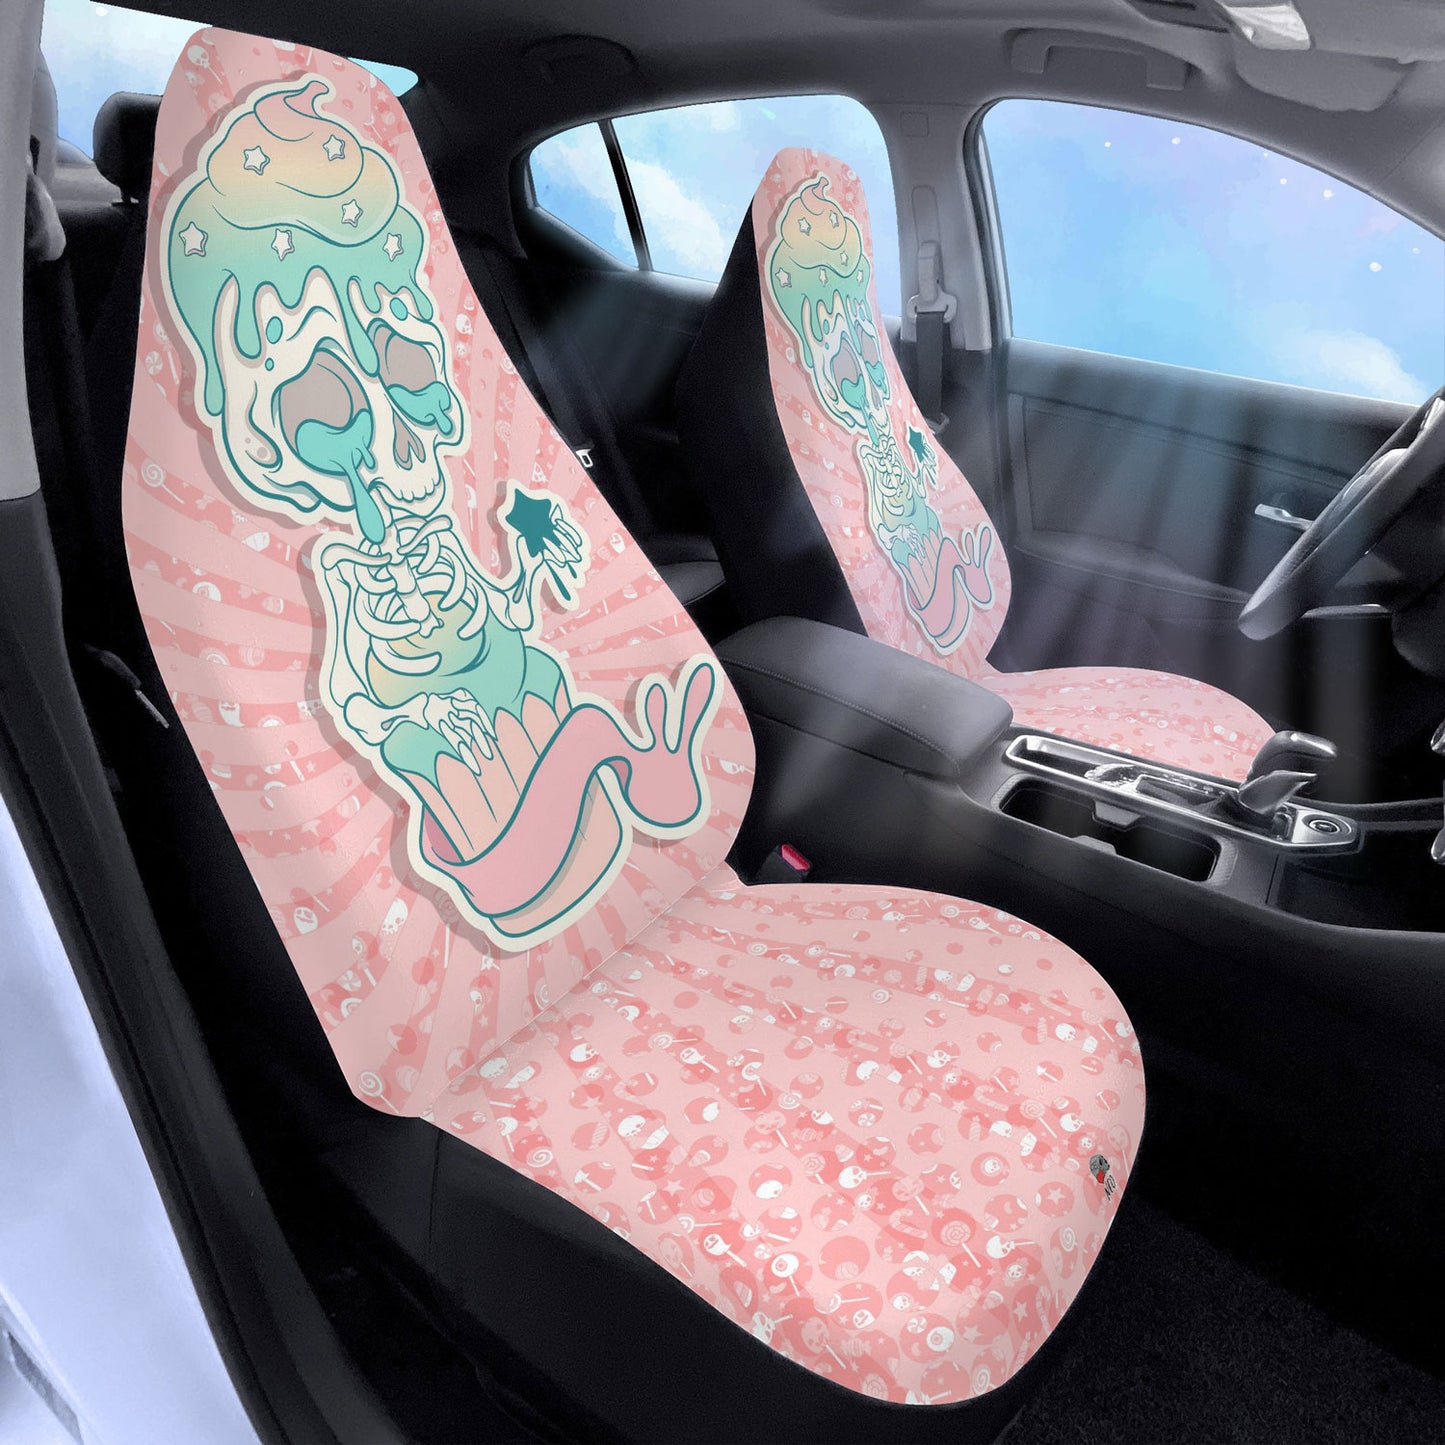 Sad Cookie Car Seat Covers